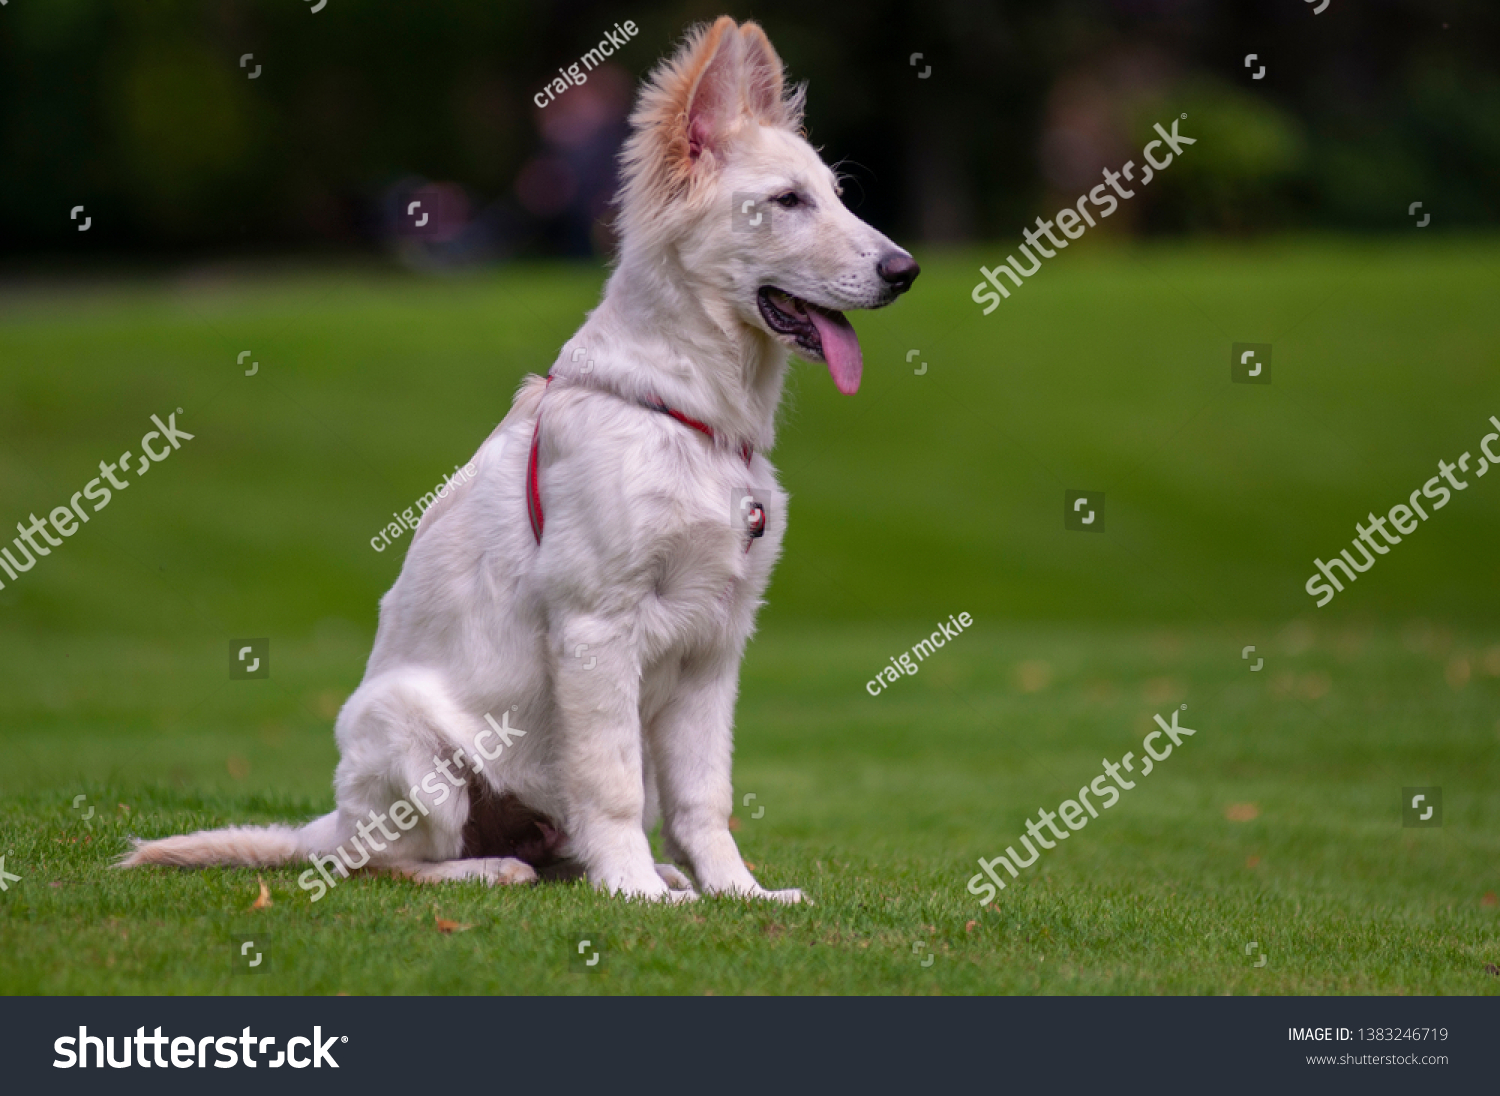 White German Shepherd Puppy Outdoors Field Animals Wildlife Stock Image 1383246719